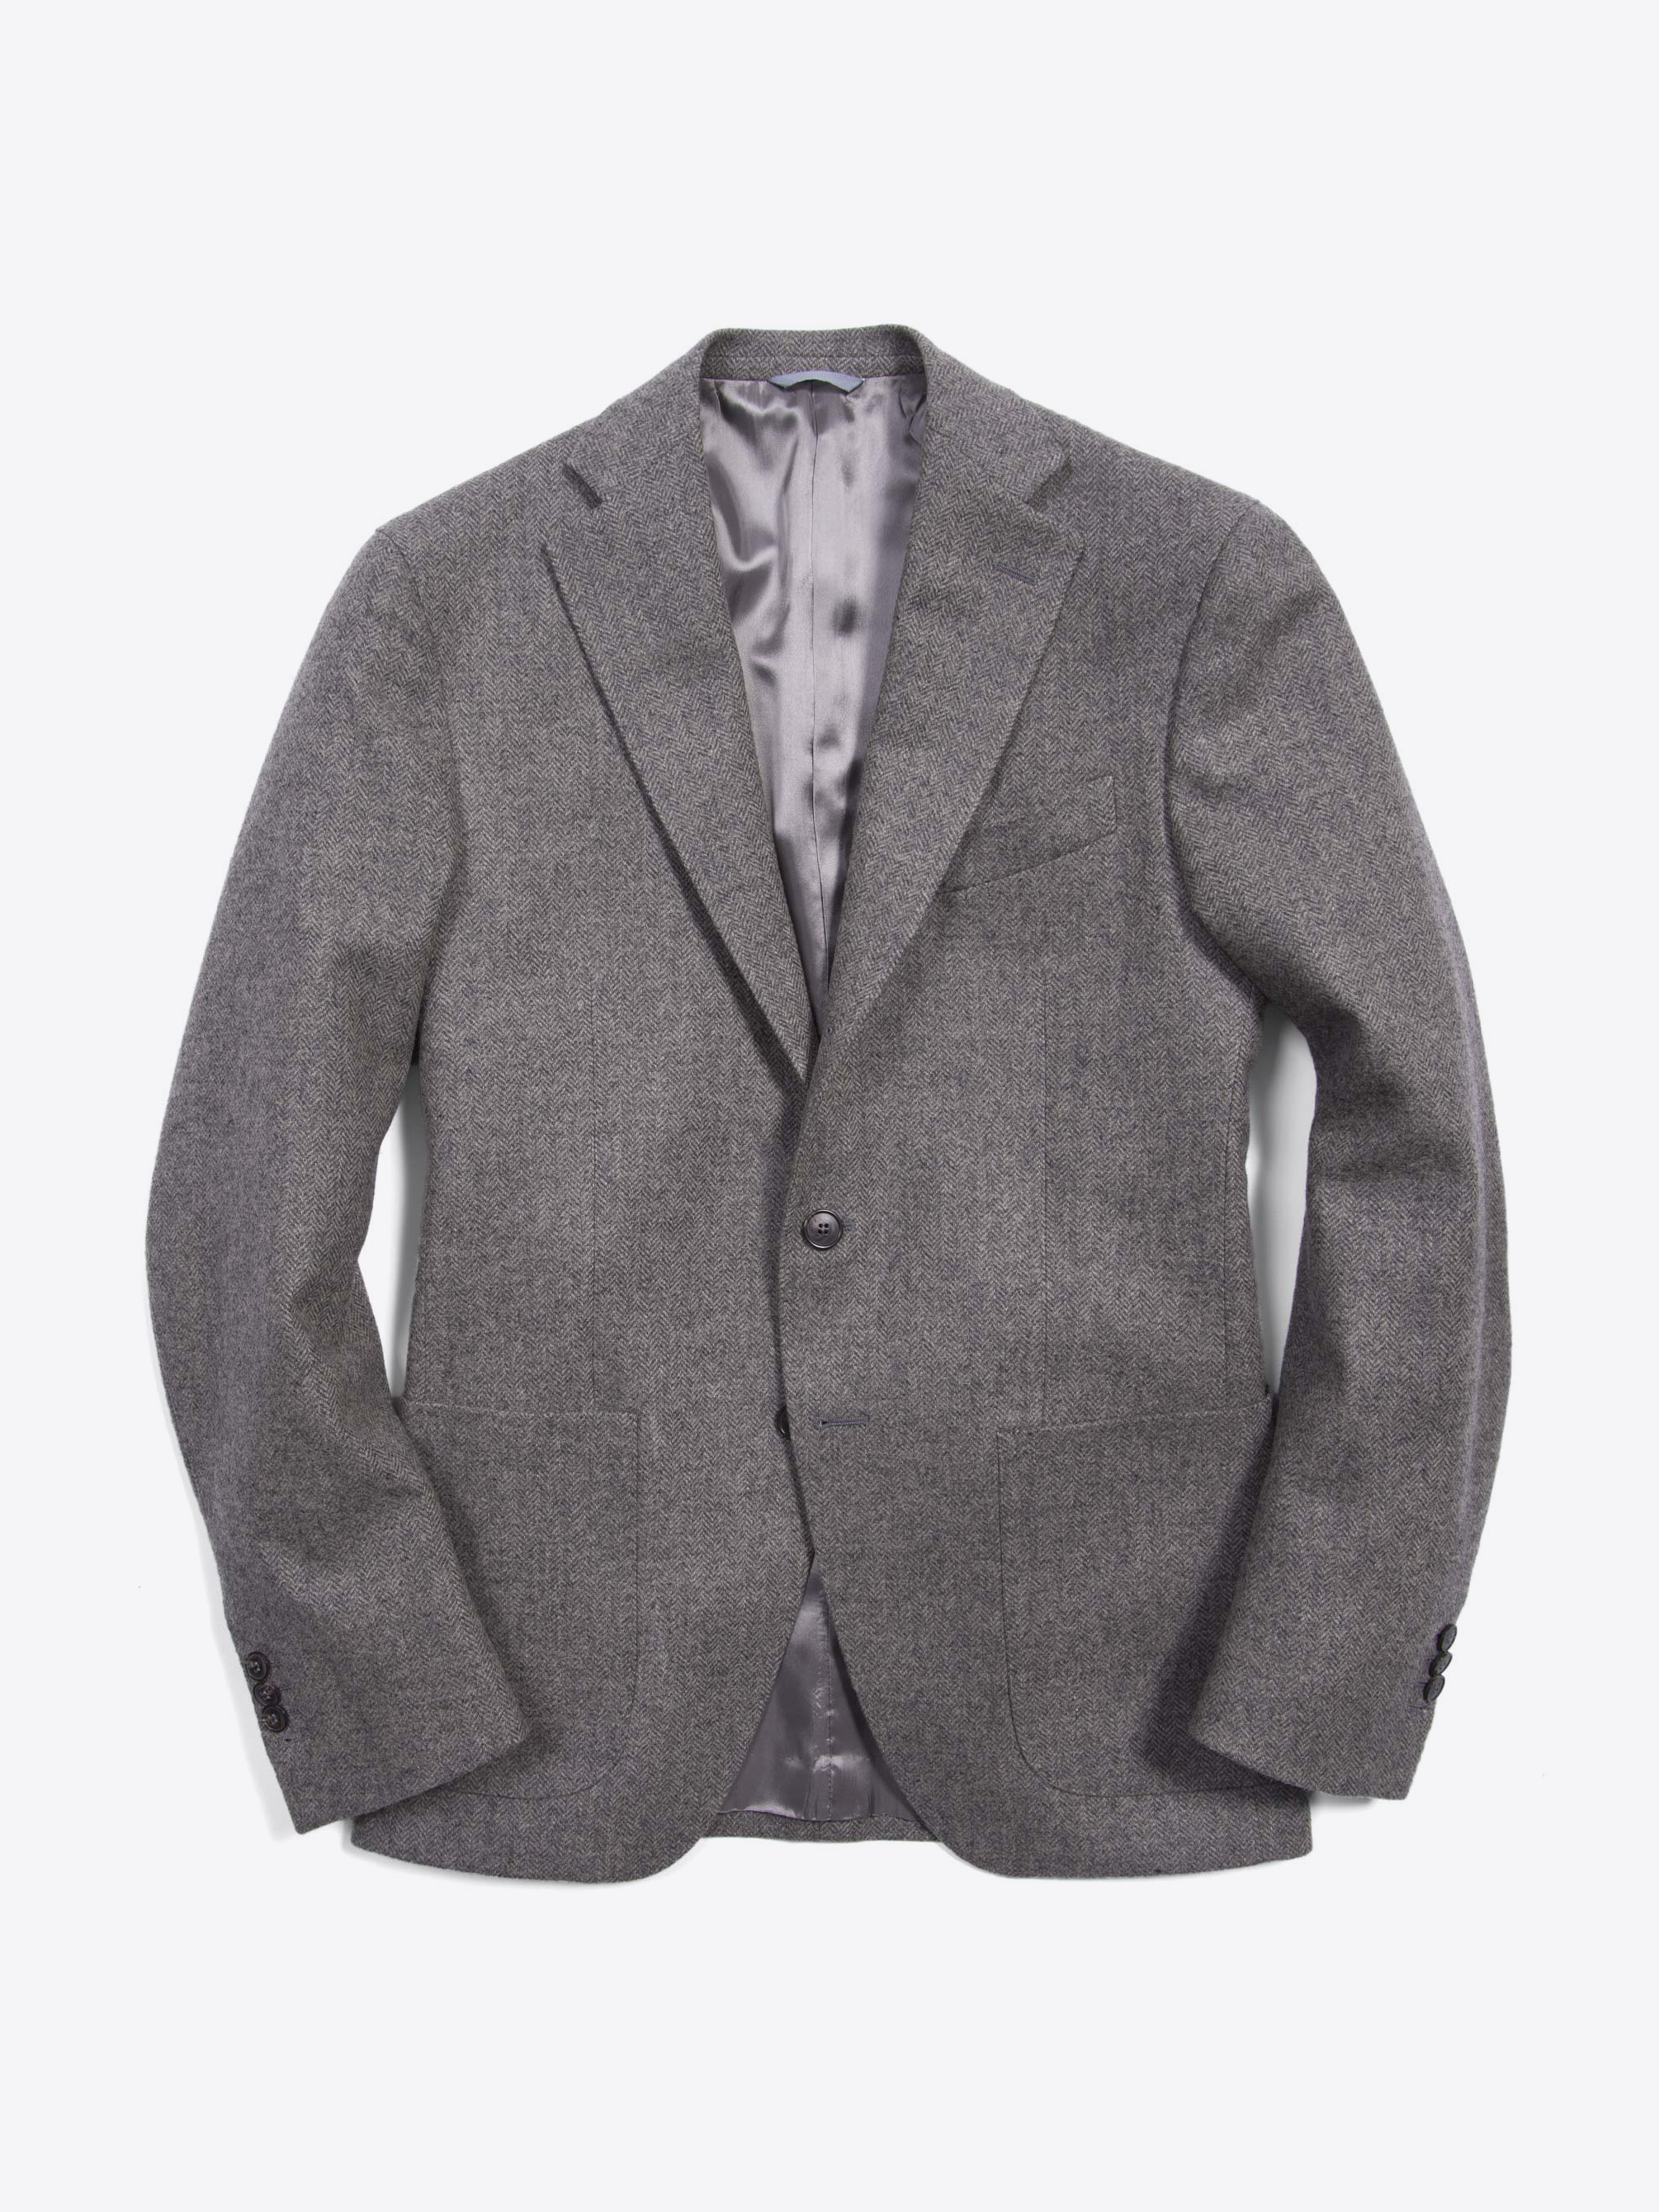 Zoom Image of Hubert Grey Herringbone Jacket